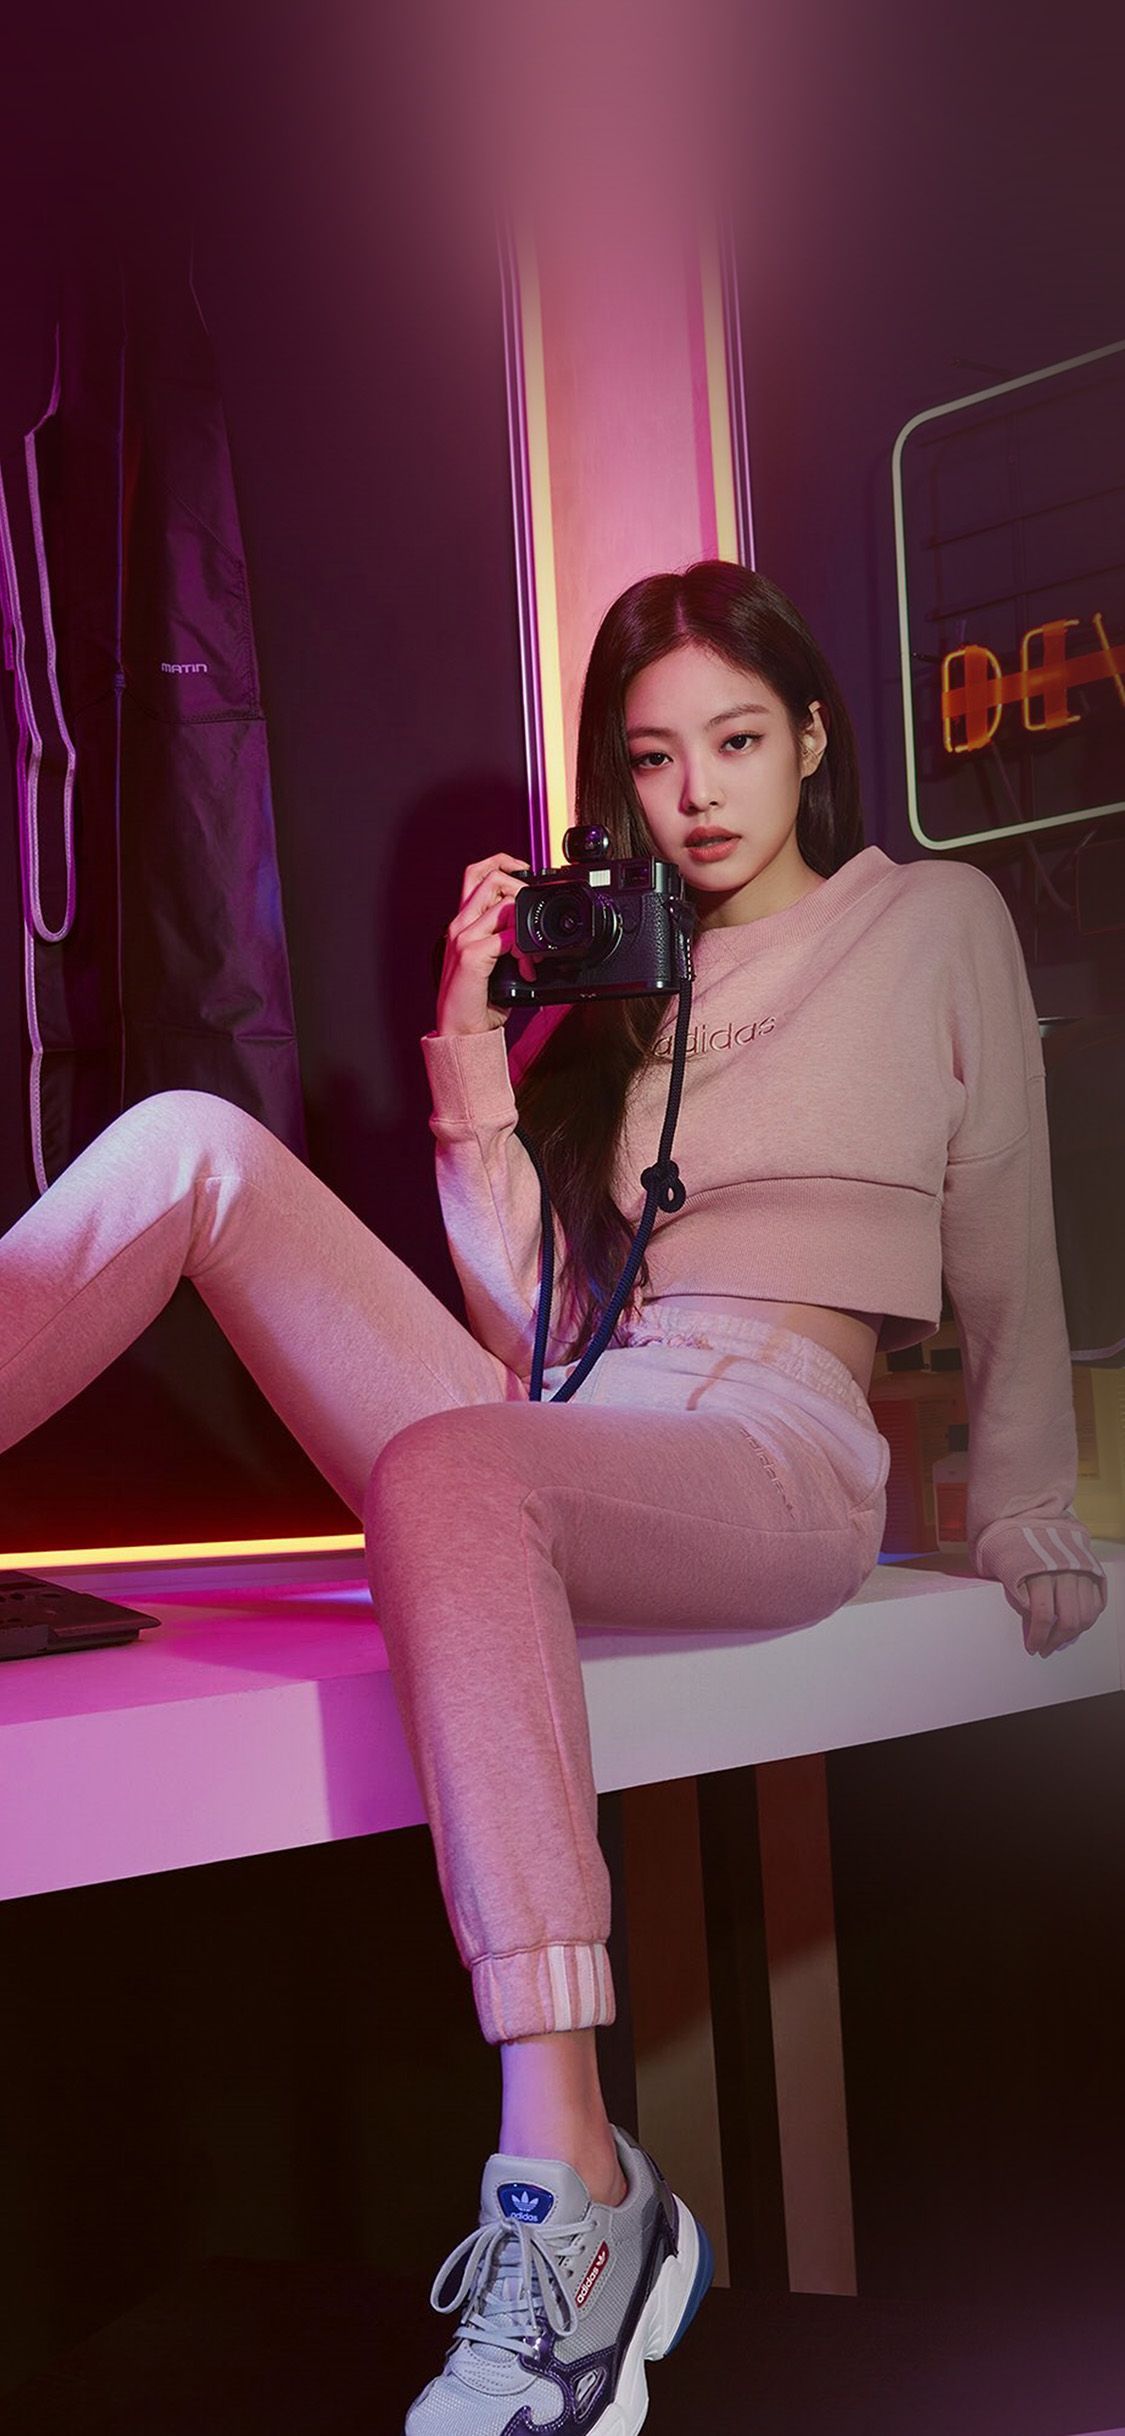 Asian Kpop Jennie Girl Blackpink Via For IPhone X. Blackpink Jennie, Kpop Iphone Wallpaper, Blackpink